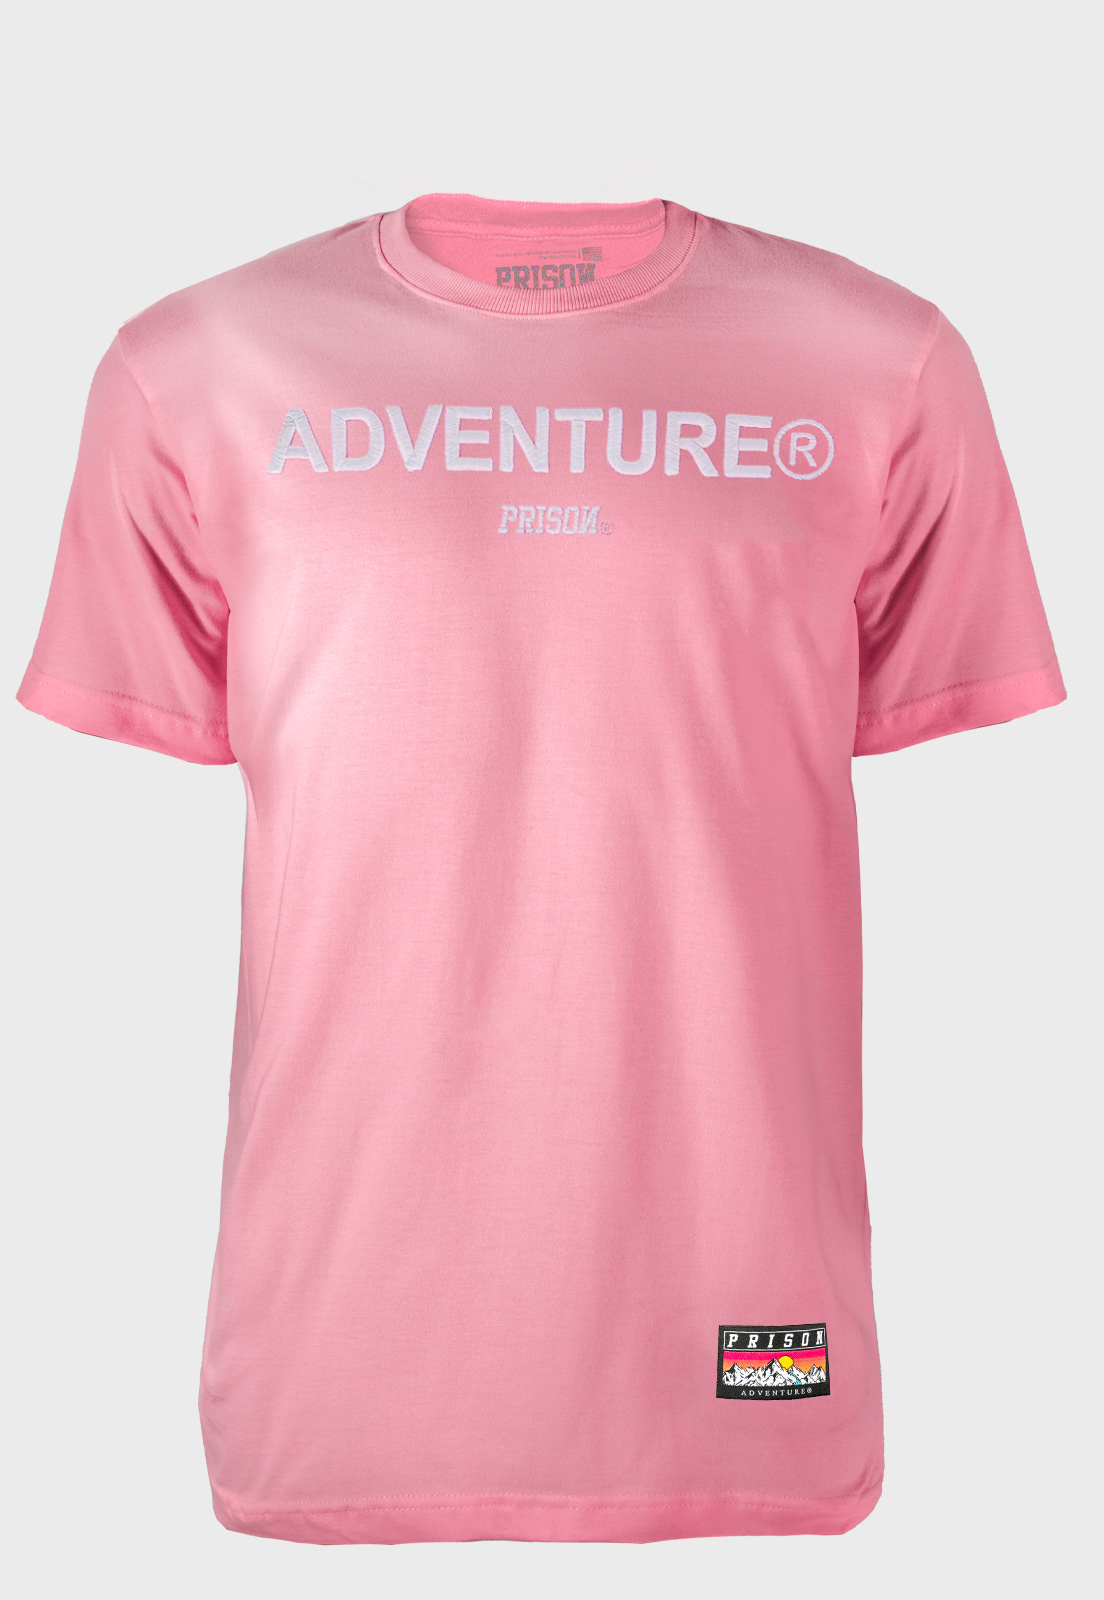 Camiseta Prison Bordada Adventure Rosa